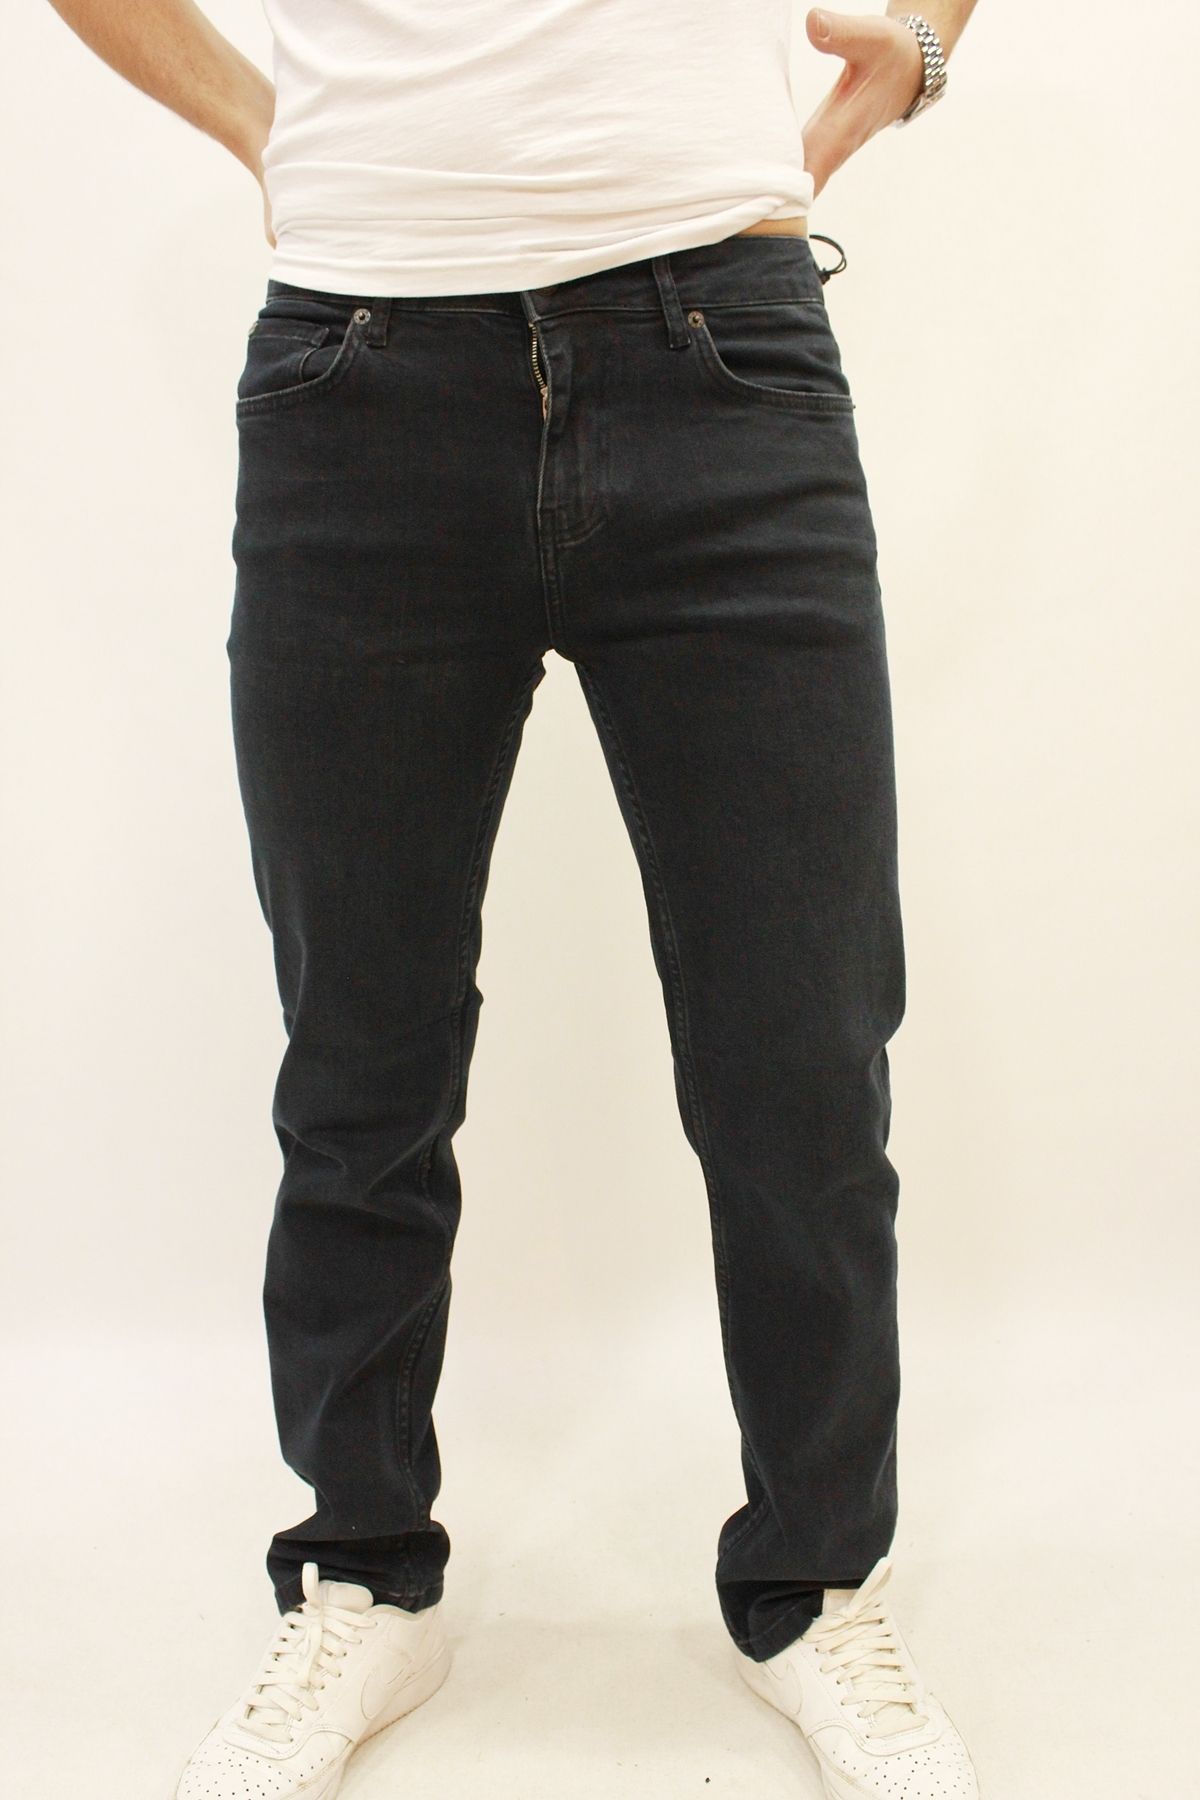 Twister Jeans Milano 717-05 Dark Brown Erkek Likralı Rahat Kesim Kot Pantolon Laci